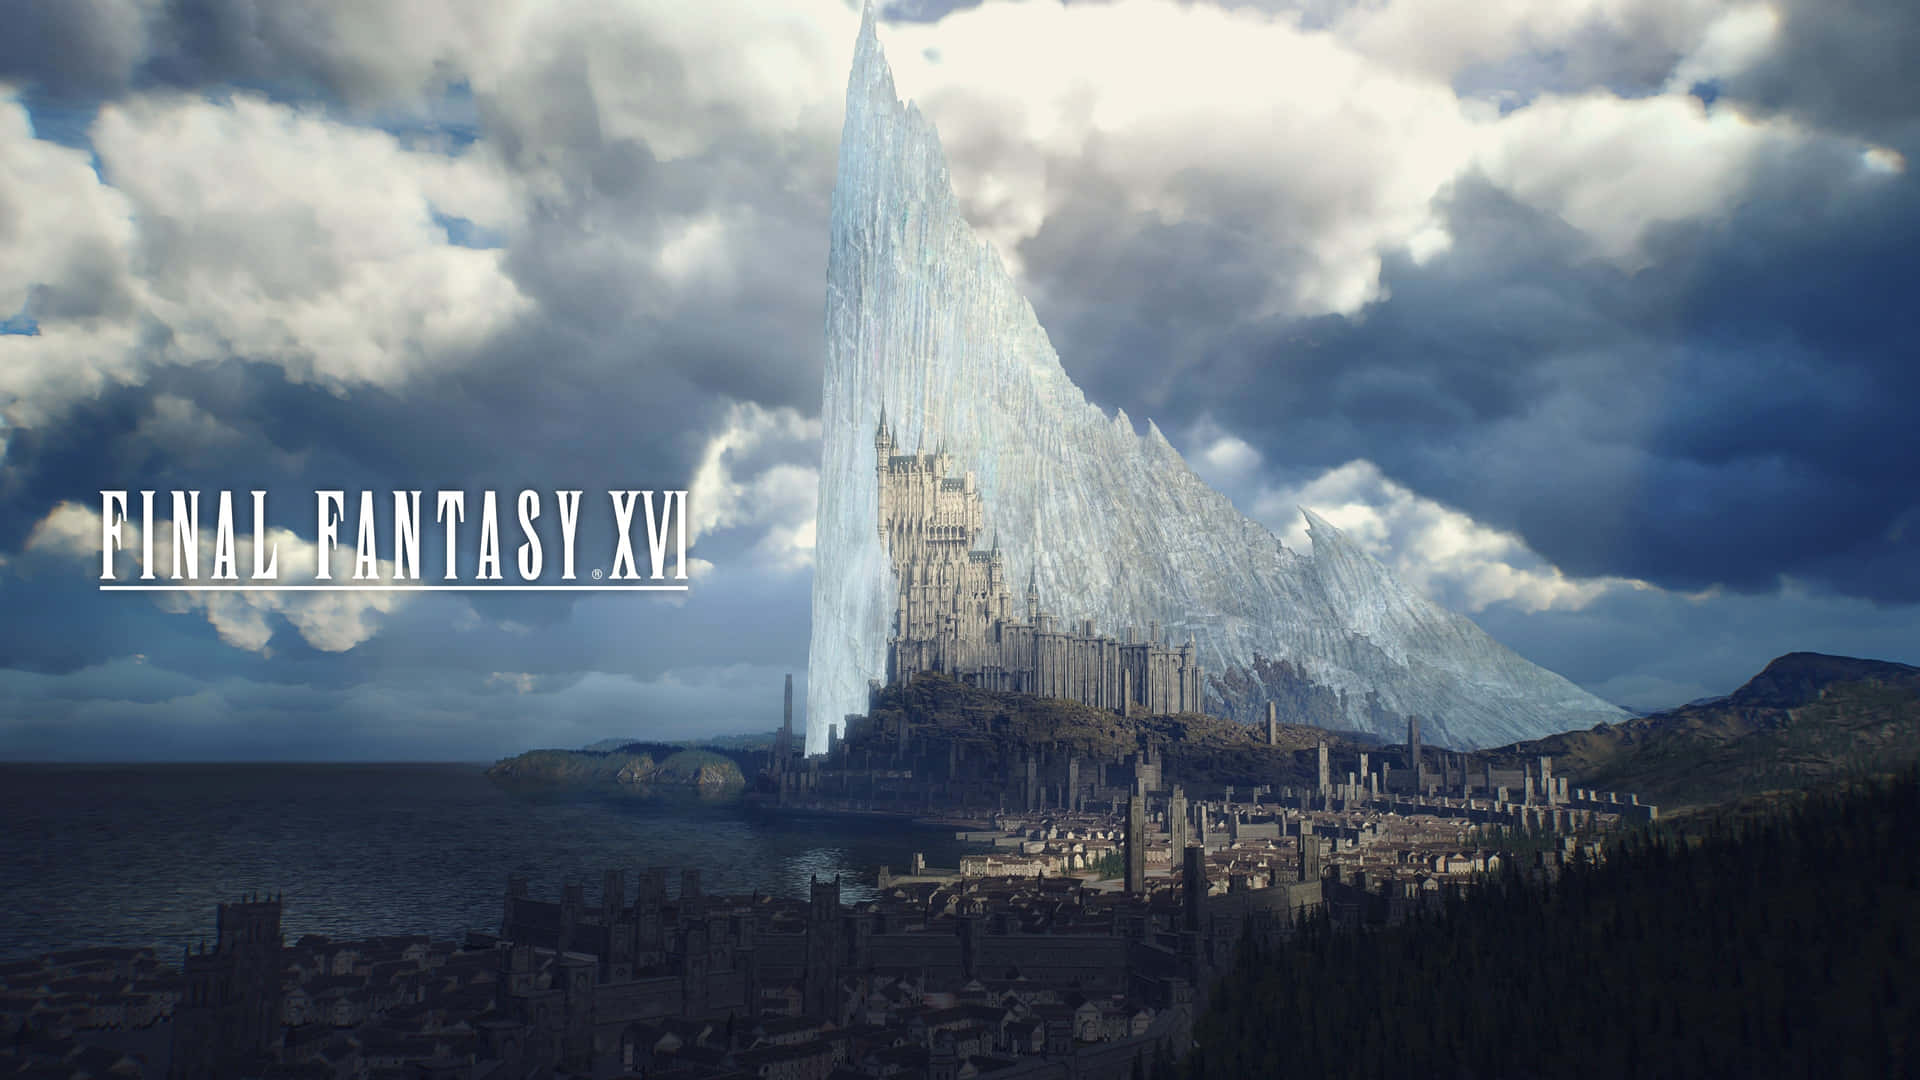 Final Fantasy X V I Crystalline Castle Wallpaper